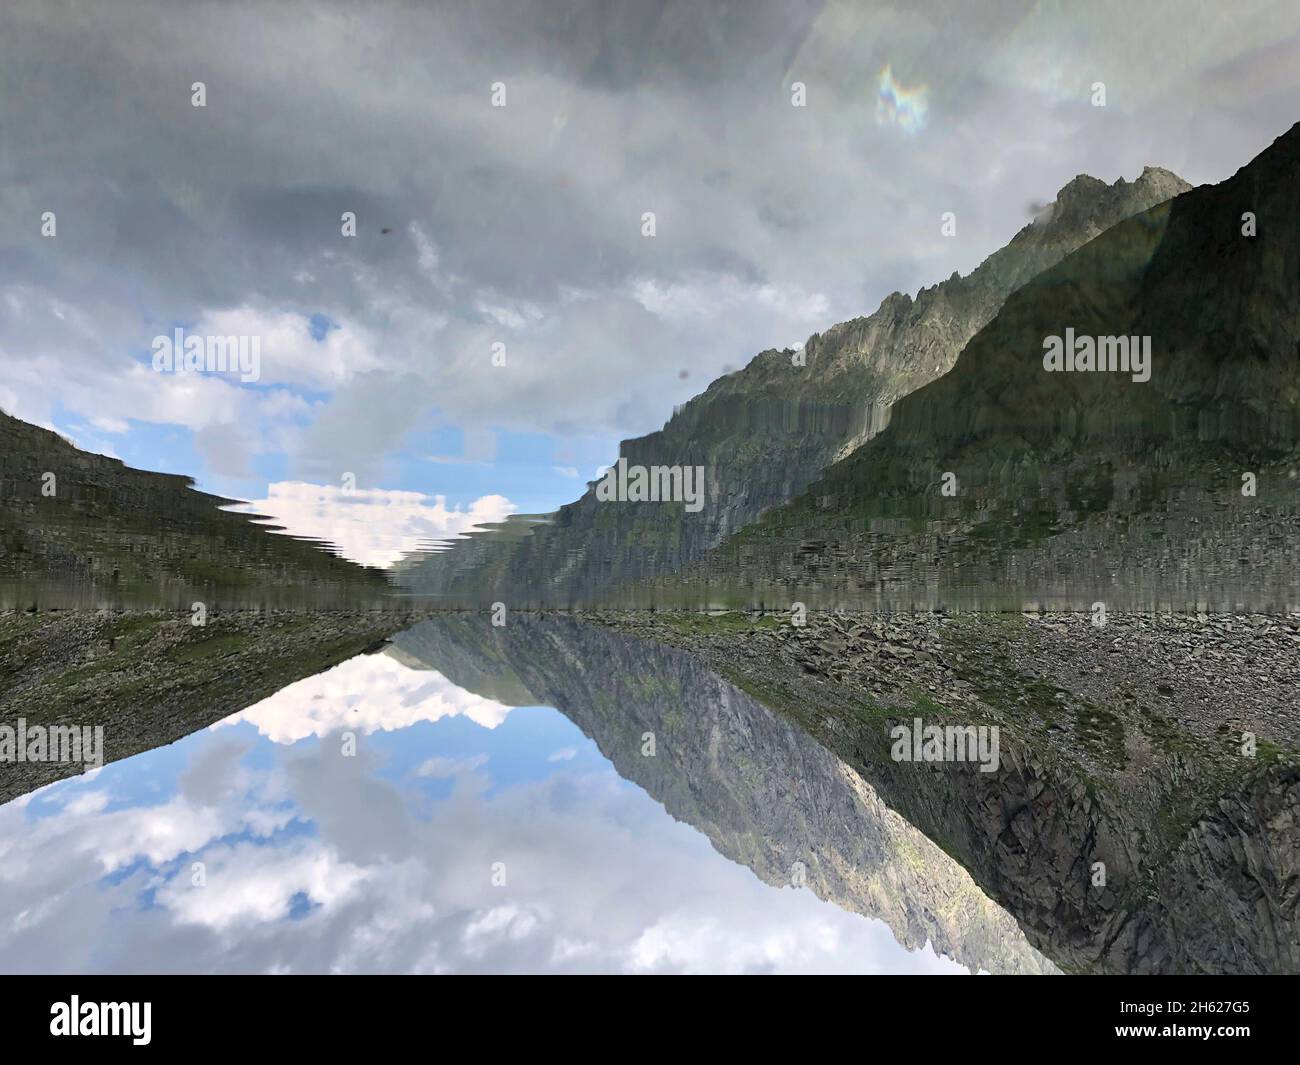 am hundstalsee,inzinger alm,mitterkogel,rosskogel,stubai alps,mountains,nature,inzing,tyrol,austria Stock Photo